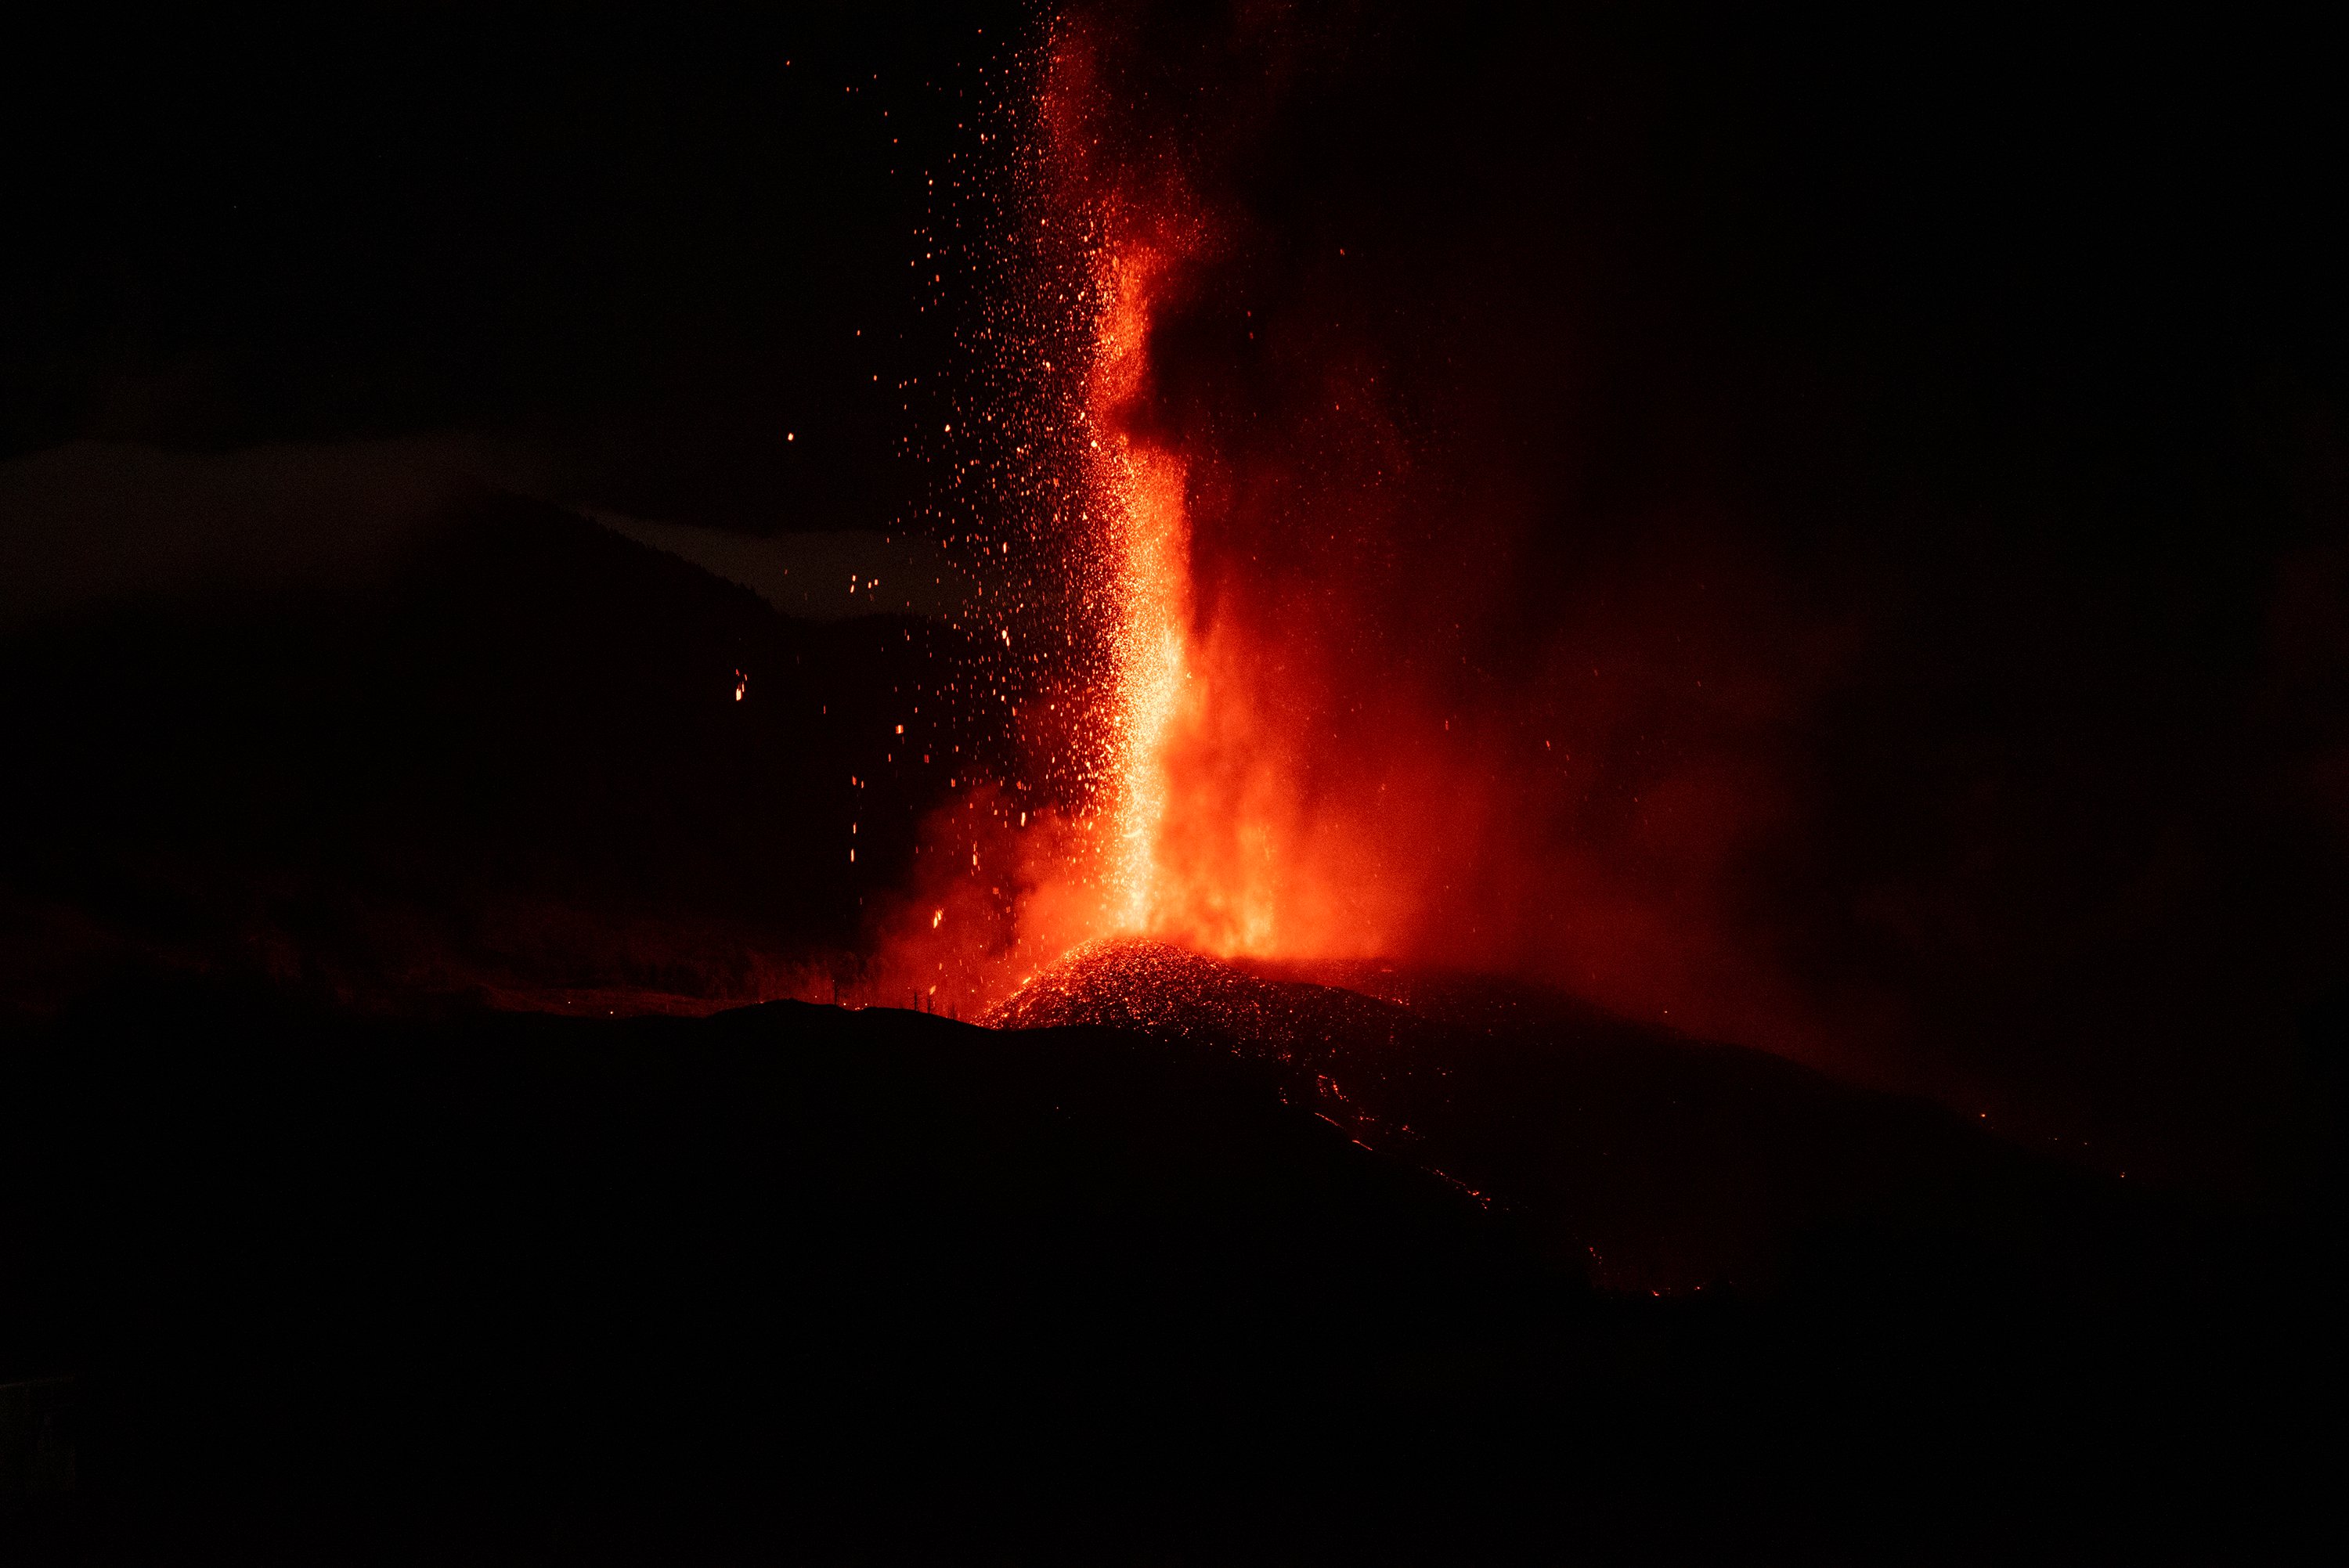 La Palma Volcano Continues To Erupt